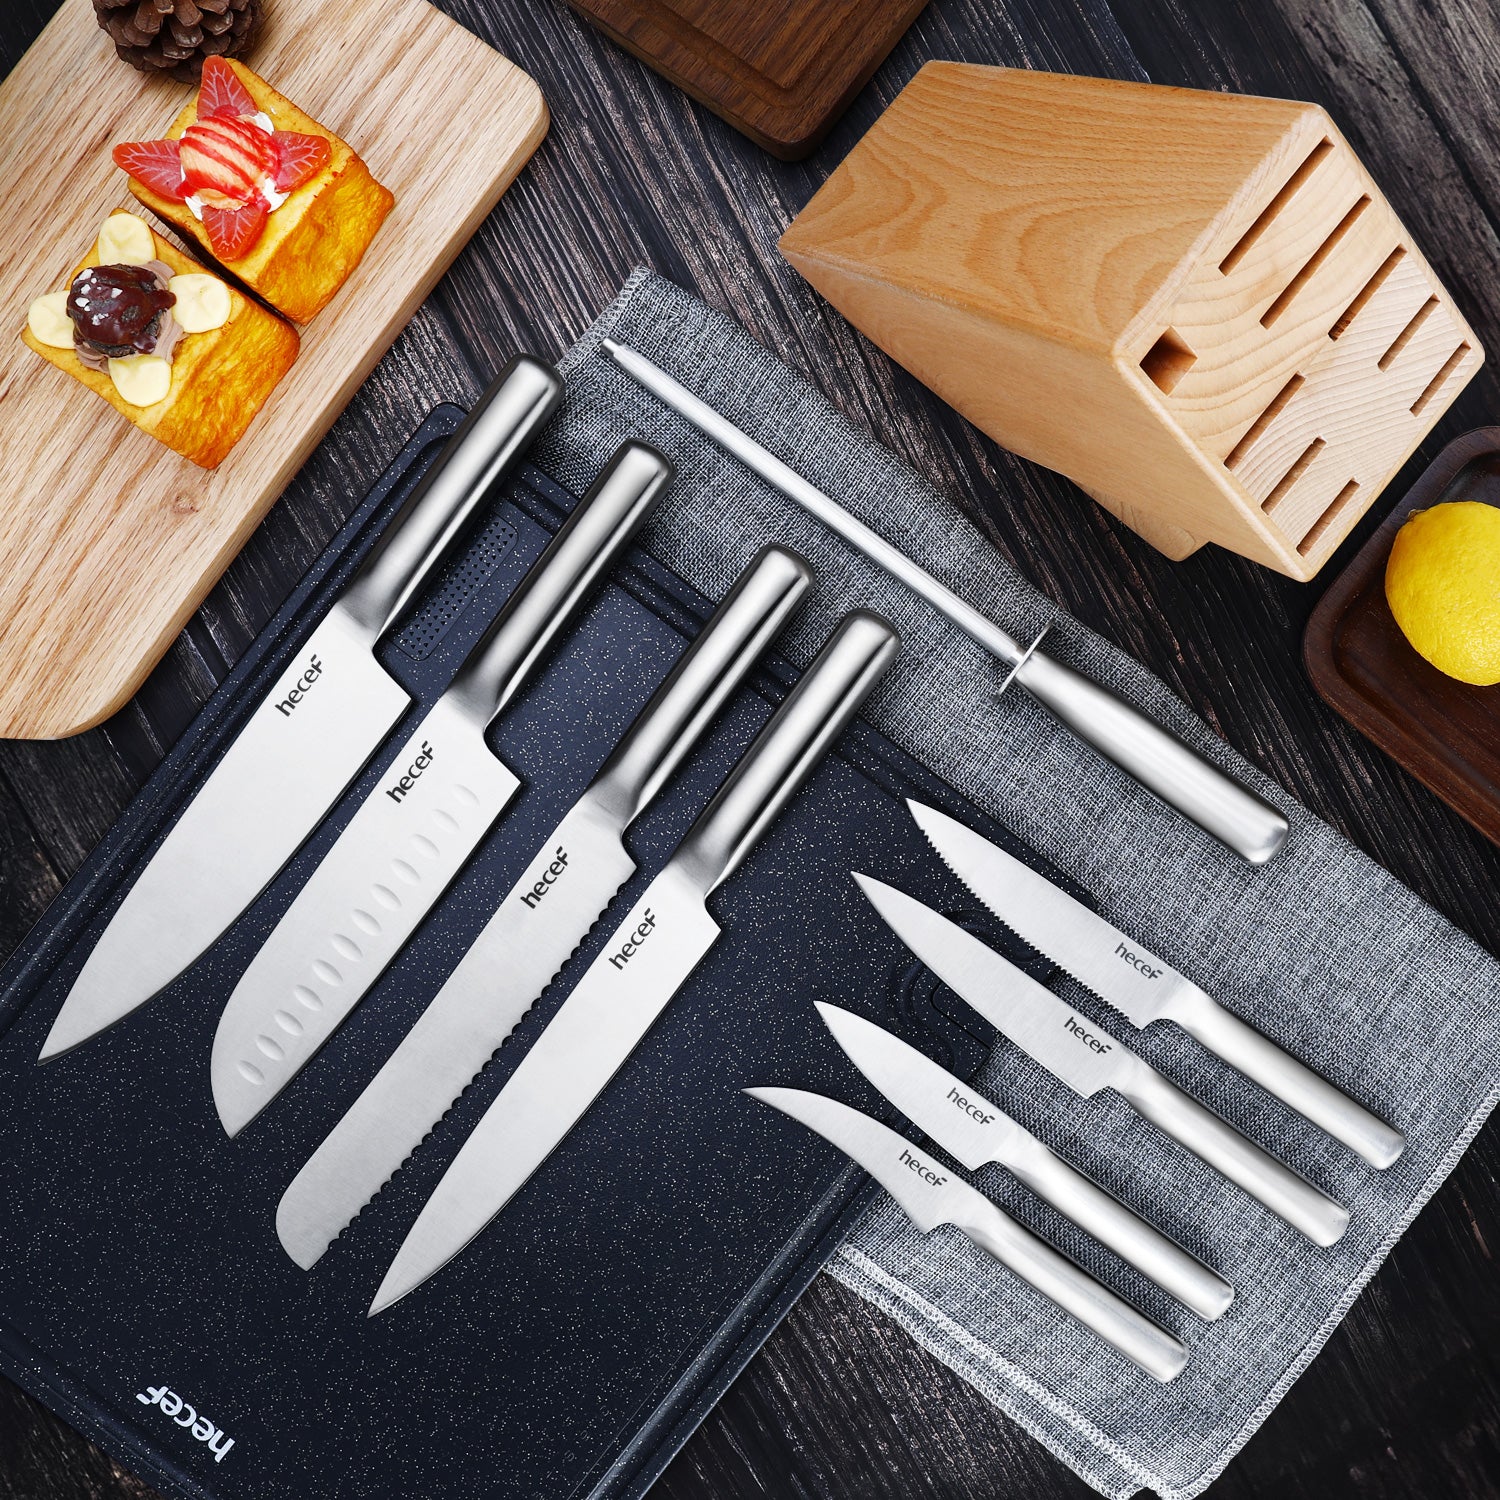 Hecef 14-Piece Kitchen Knife Set with Wooden Block Rainbow Blades,  Dishwasher Safe Titanium Coating Chef Knife Set 